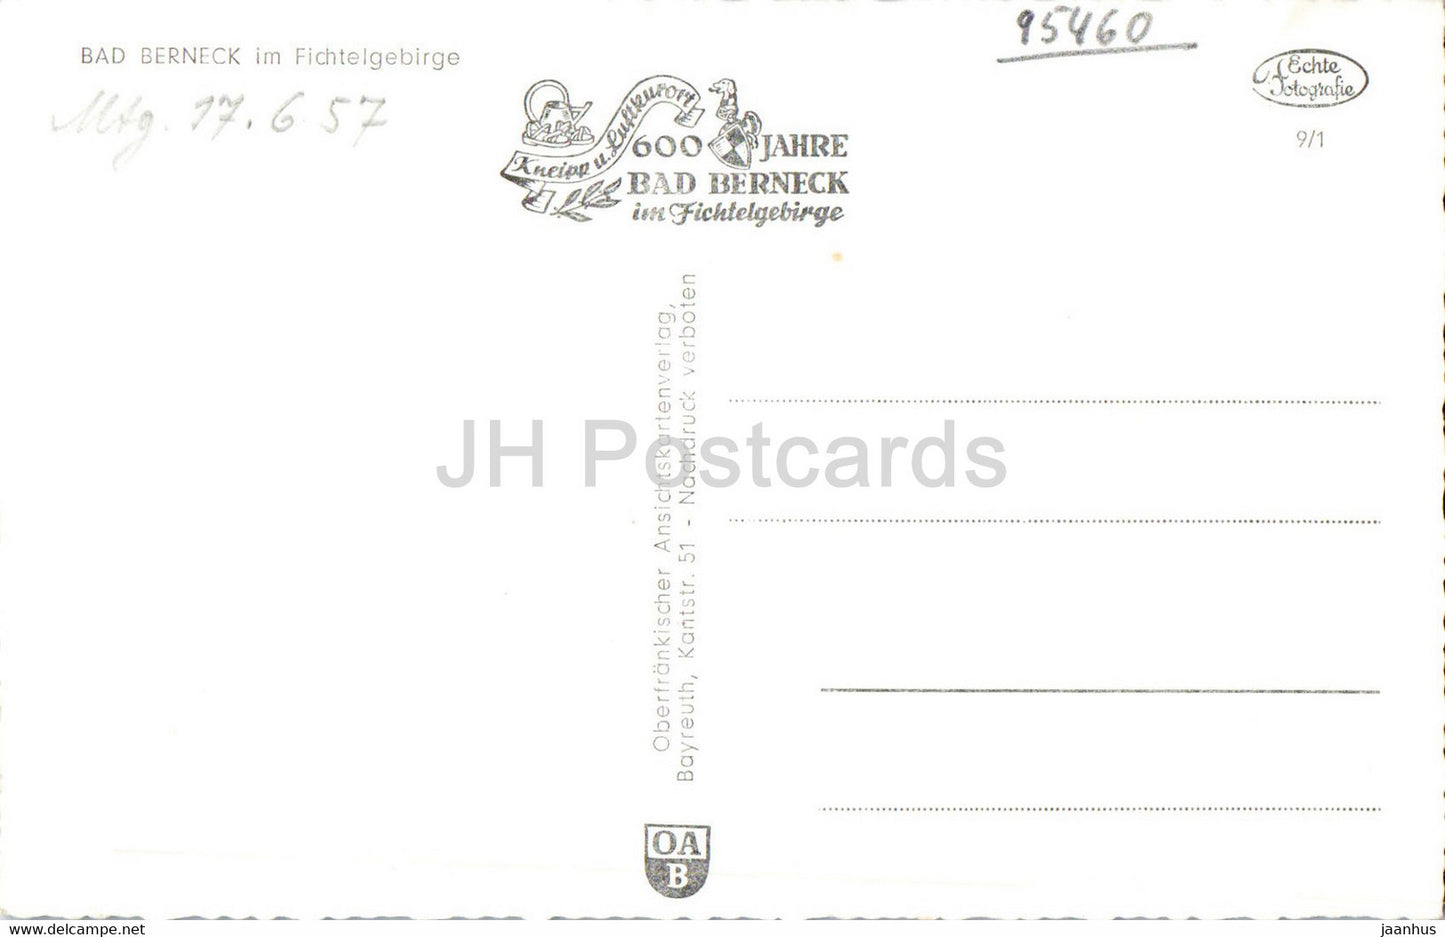 Bad Berneck im Fichtelgebirge - old postcard - Germany - unused